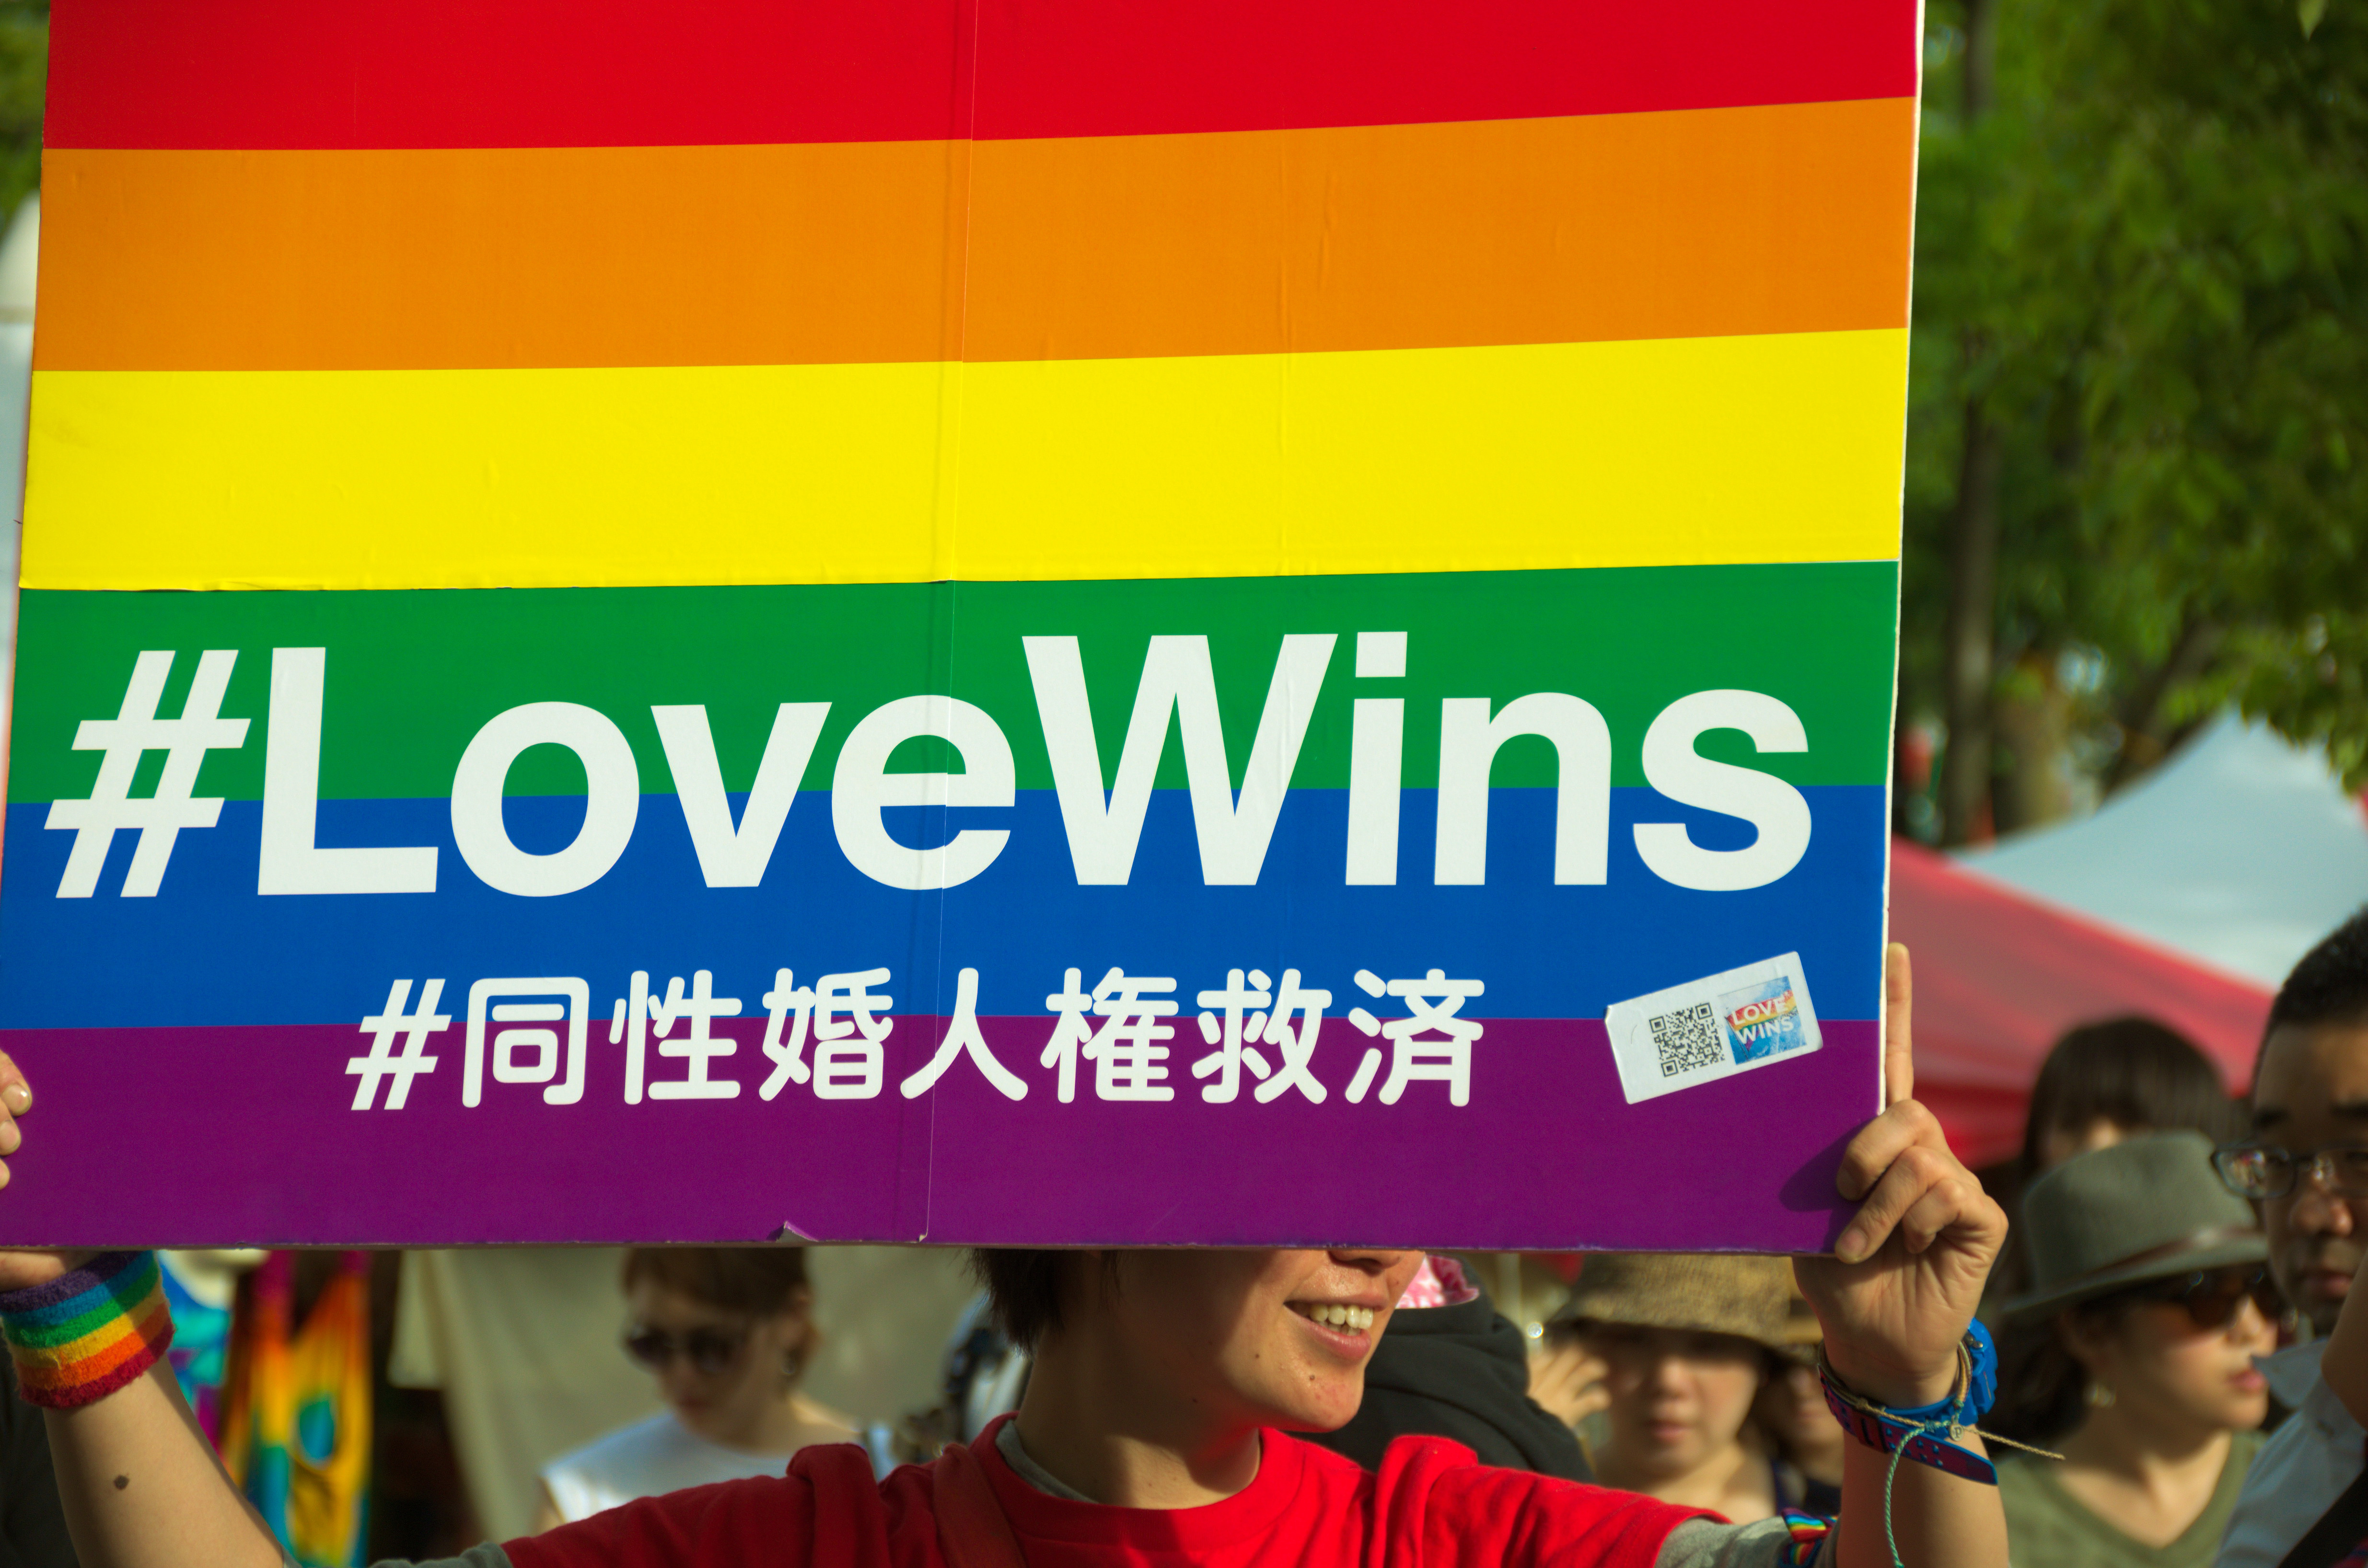 Tokyo Rainbow Pride 2016 (photo credit: U.S. Embassy Tokyo/flickr)